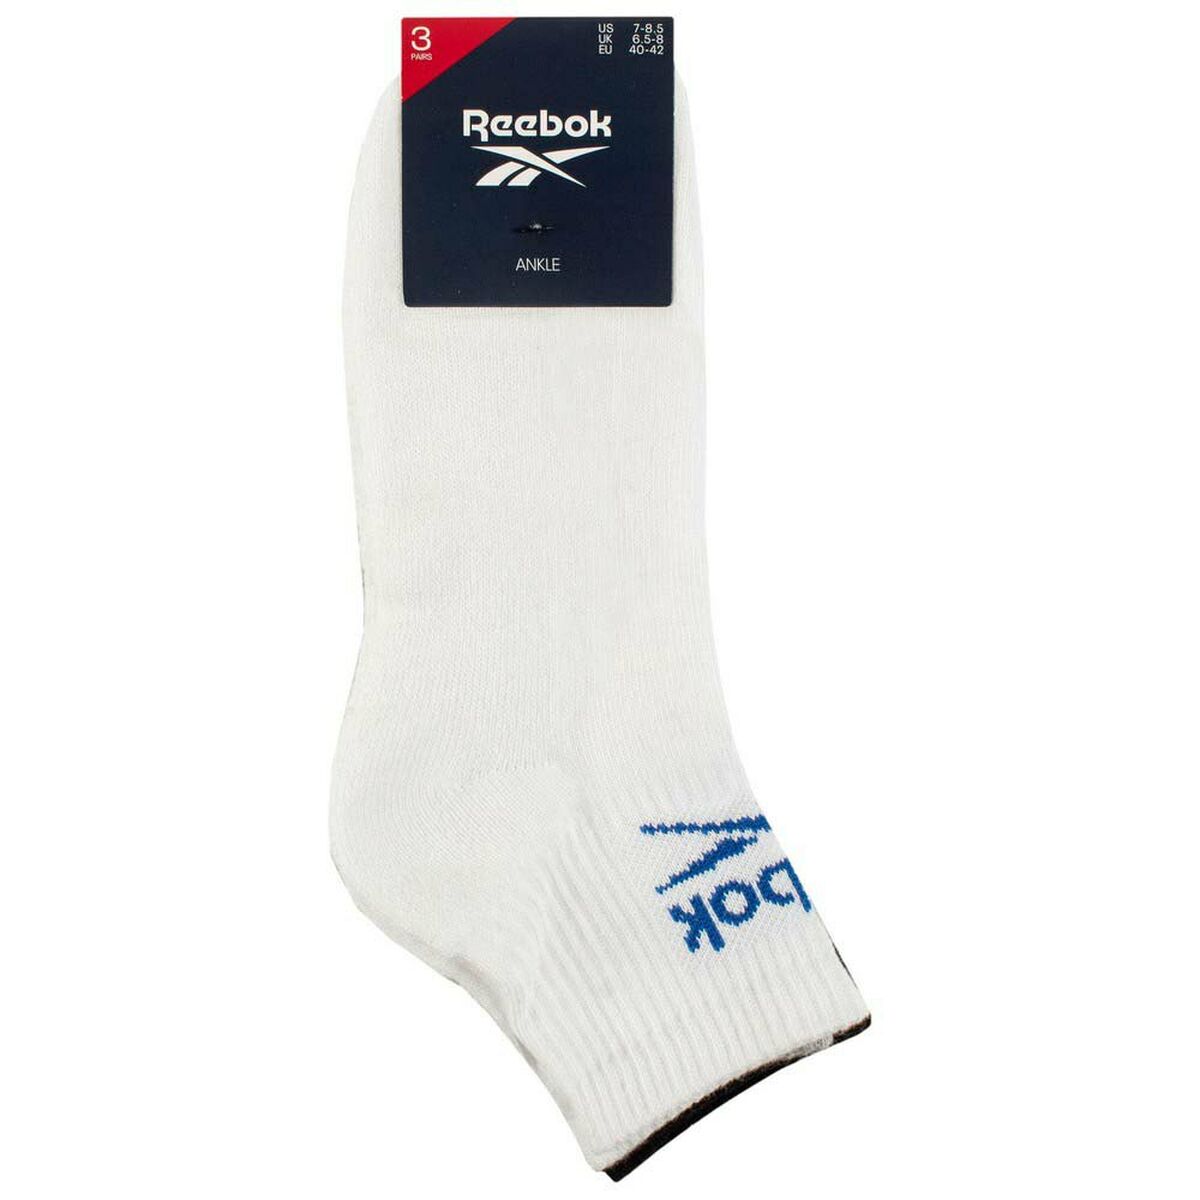 Sports Socks Reebok NKLE R 0255  White